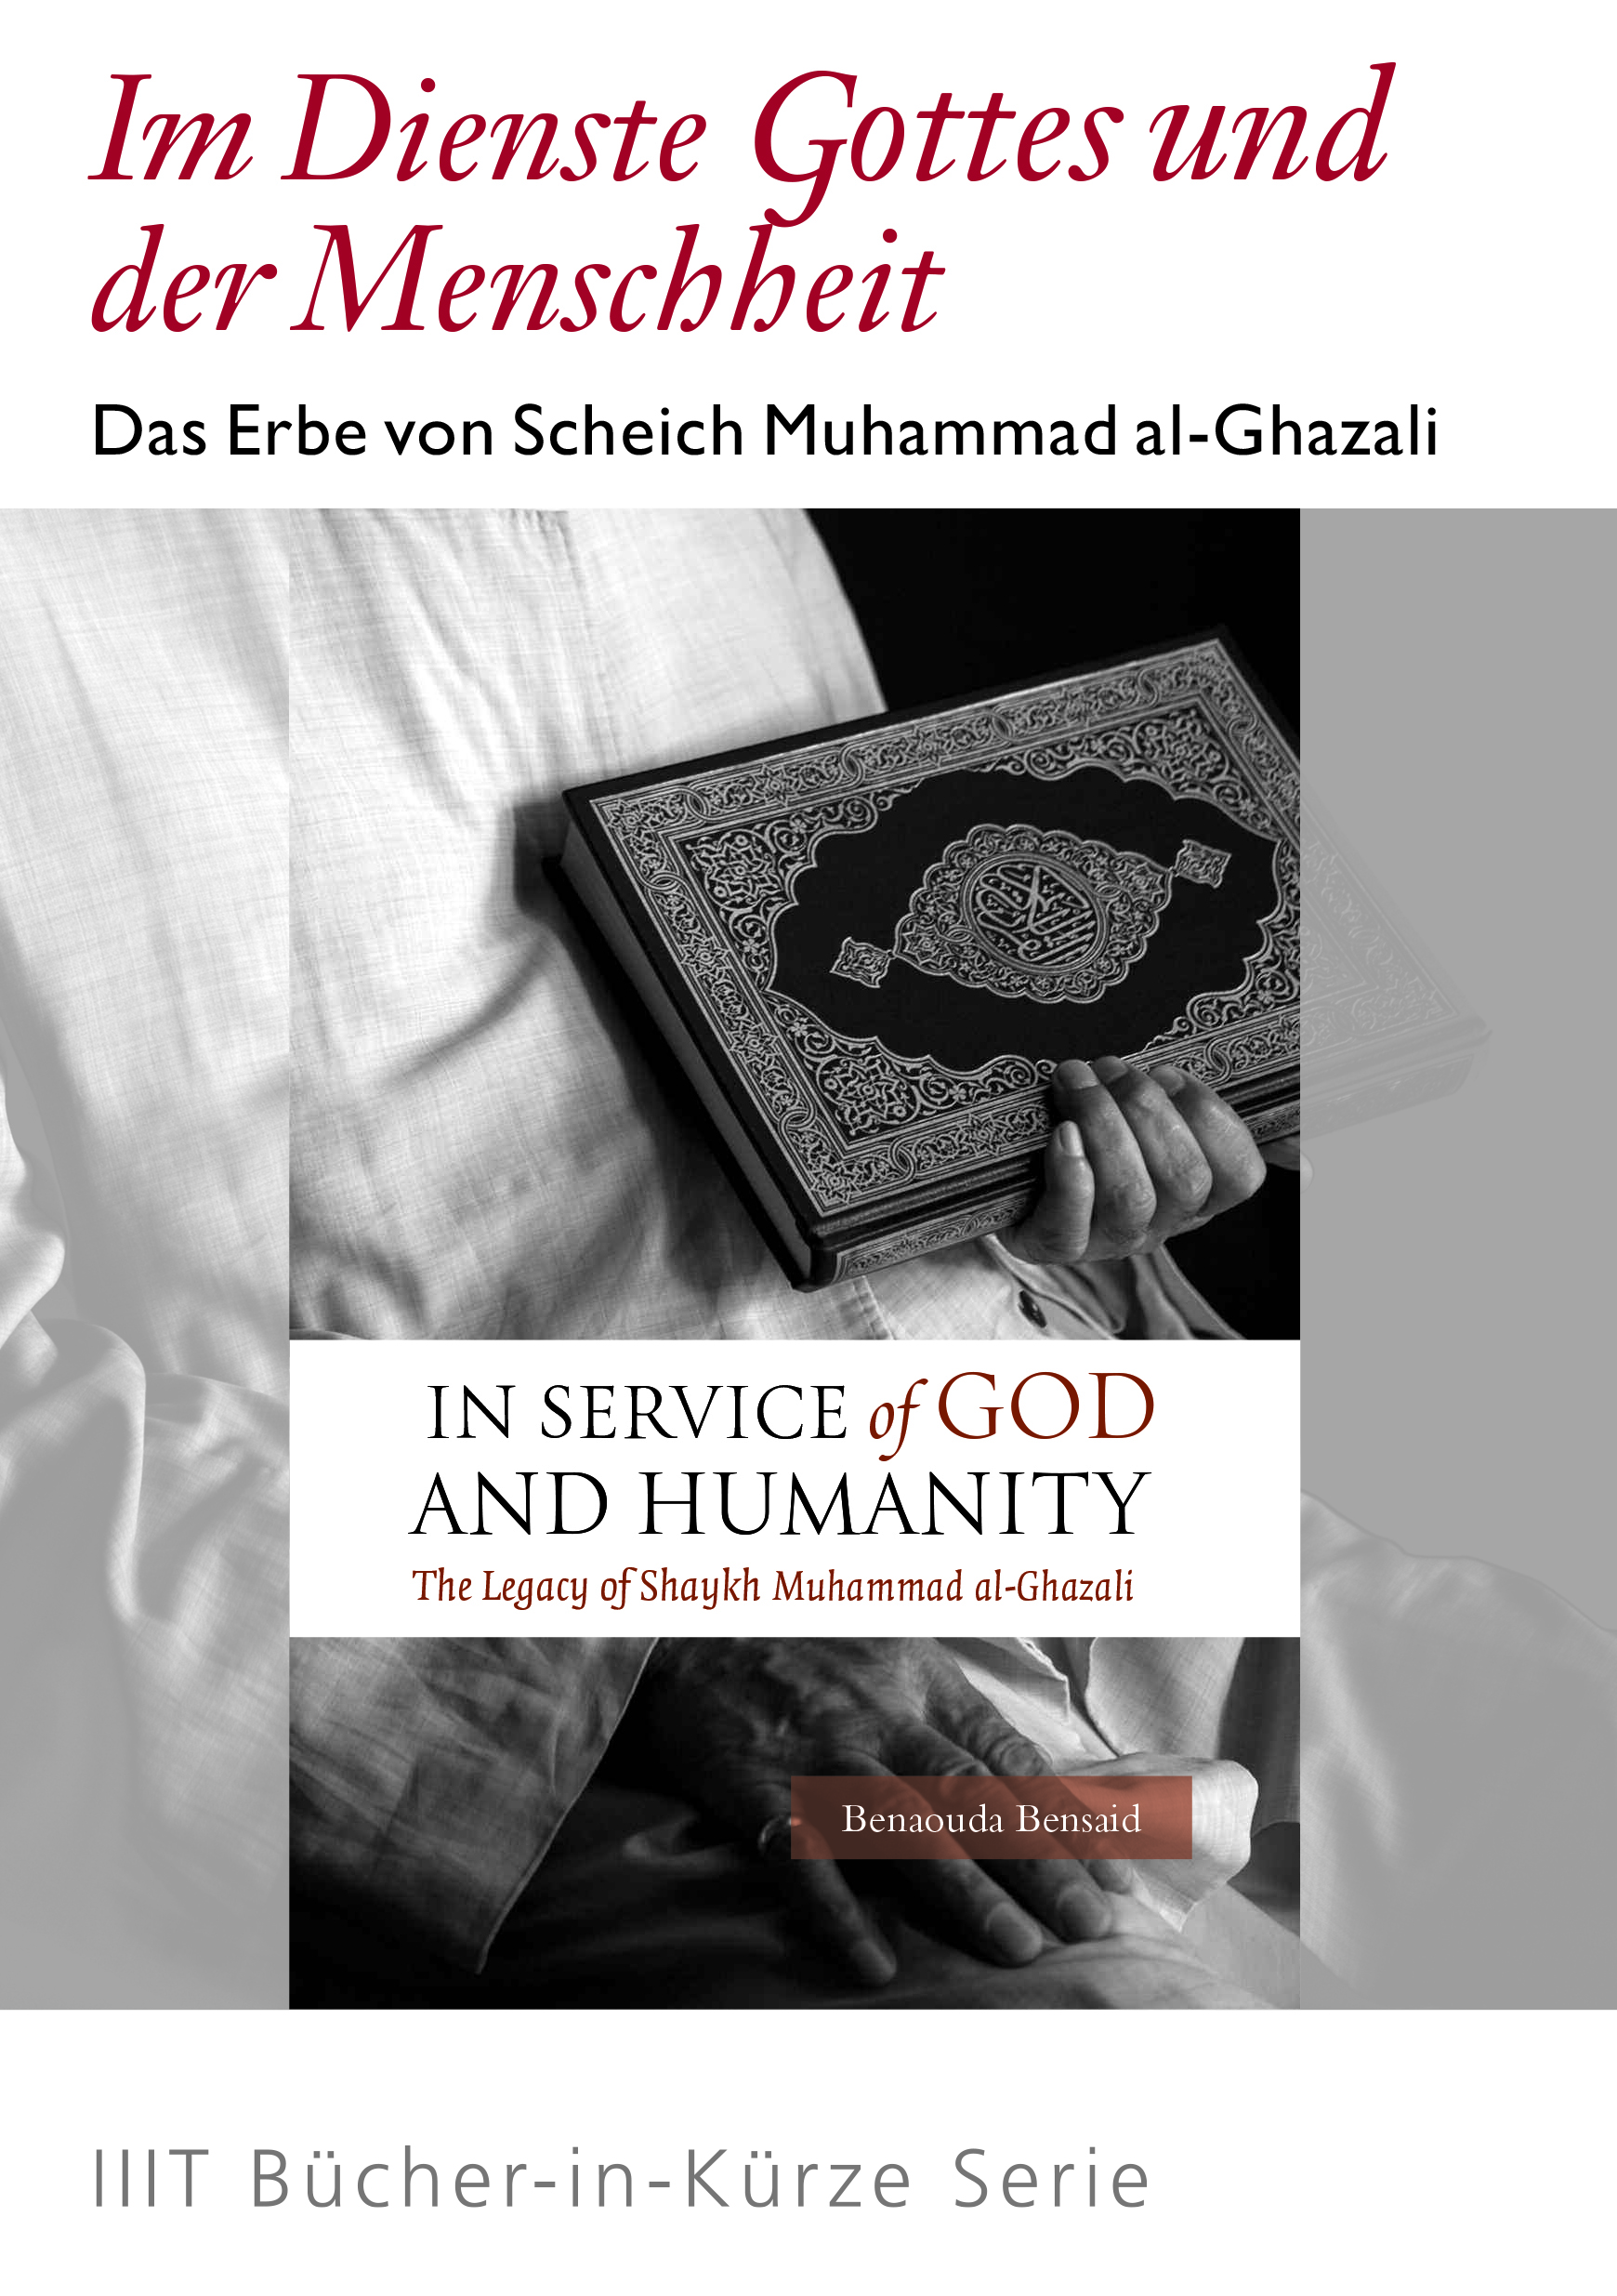 In Service of God and Humanity: The Legacy of Shaykh Muhammad al-Ghazali